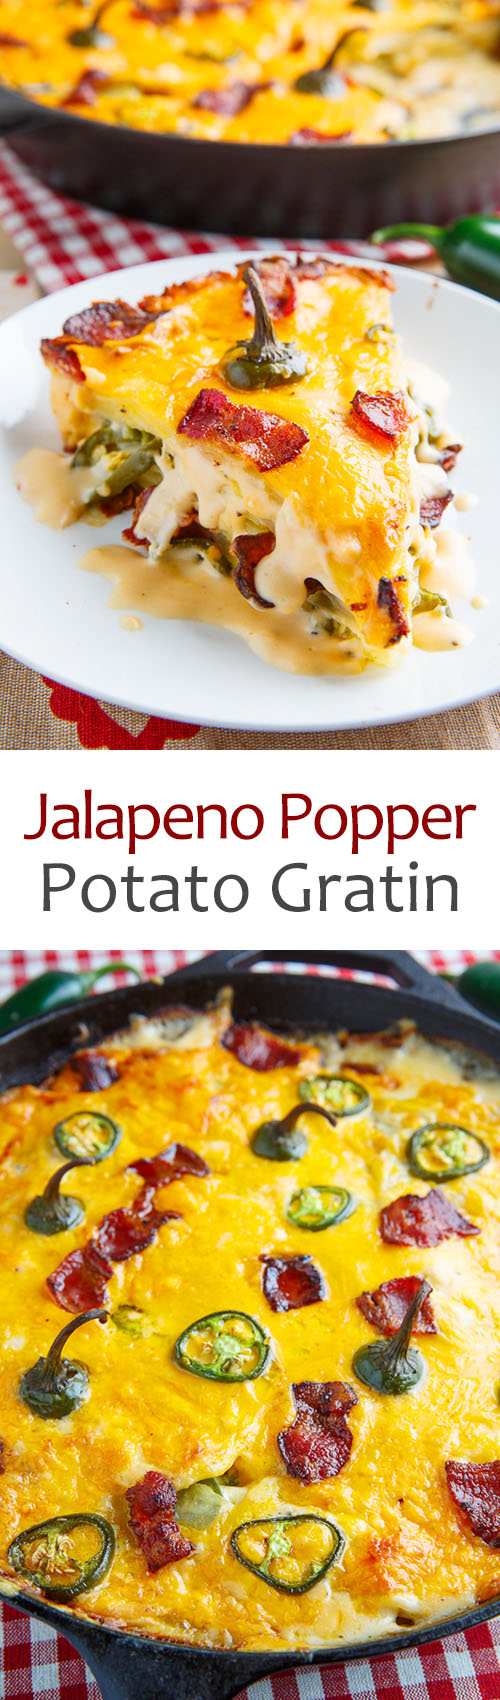 Jalapeno Popper Potato Gratin